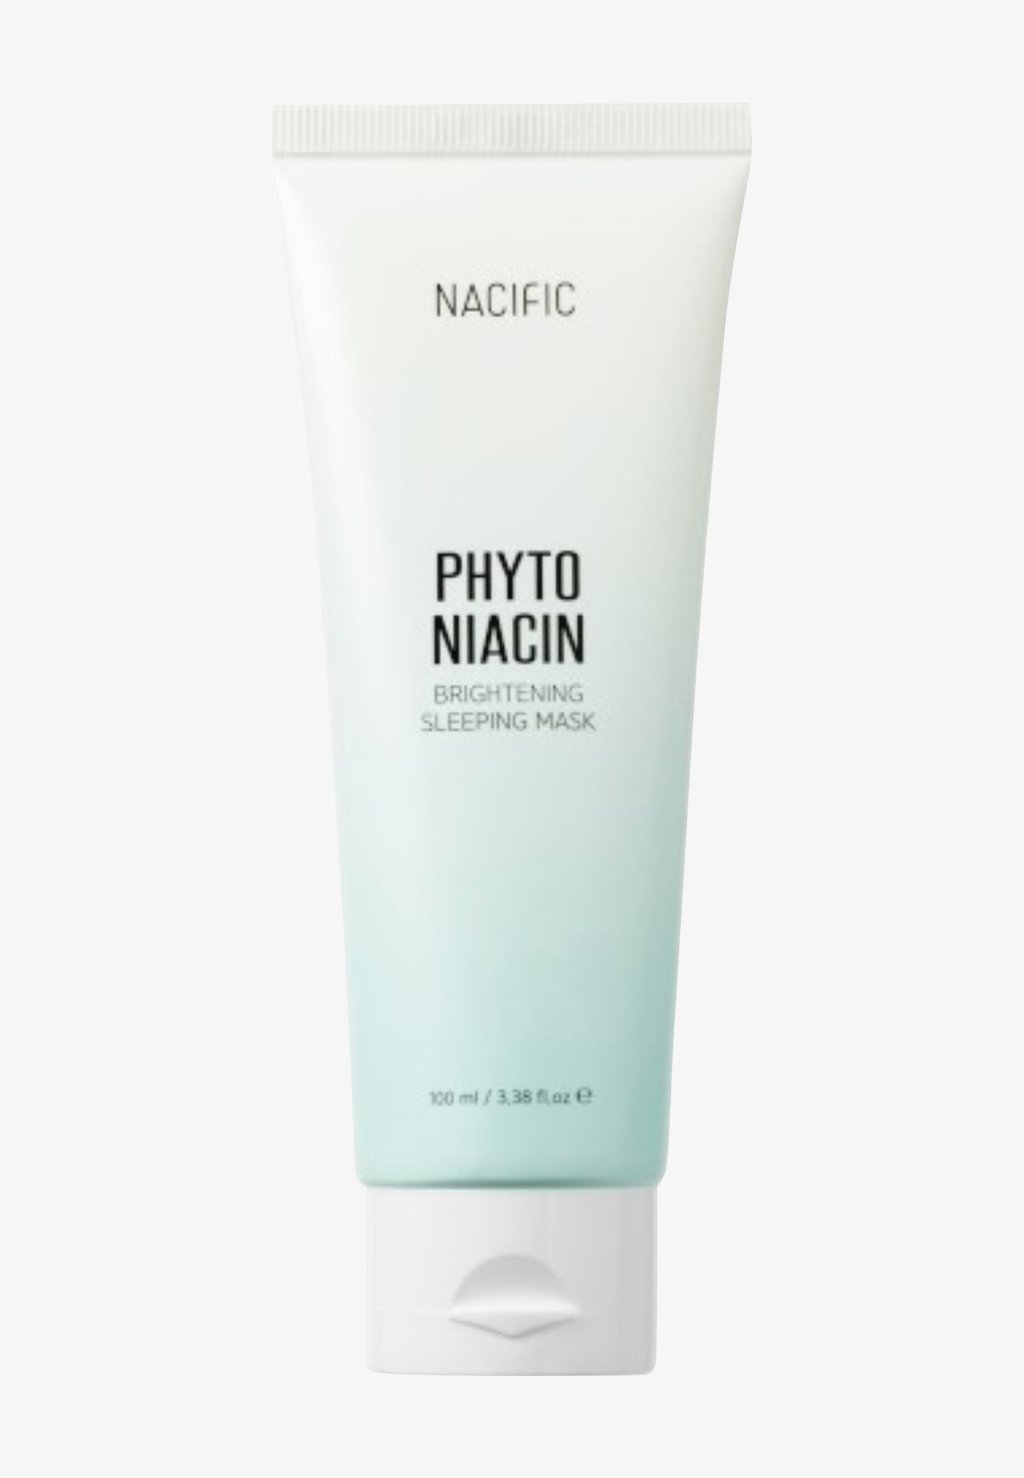 Дневной крем Phyto Niacin Brightening Sleeping Mask NACIFIC набор средств для лица nacific набор phyto niacin brightening kit